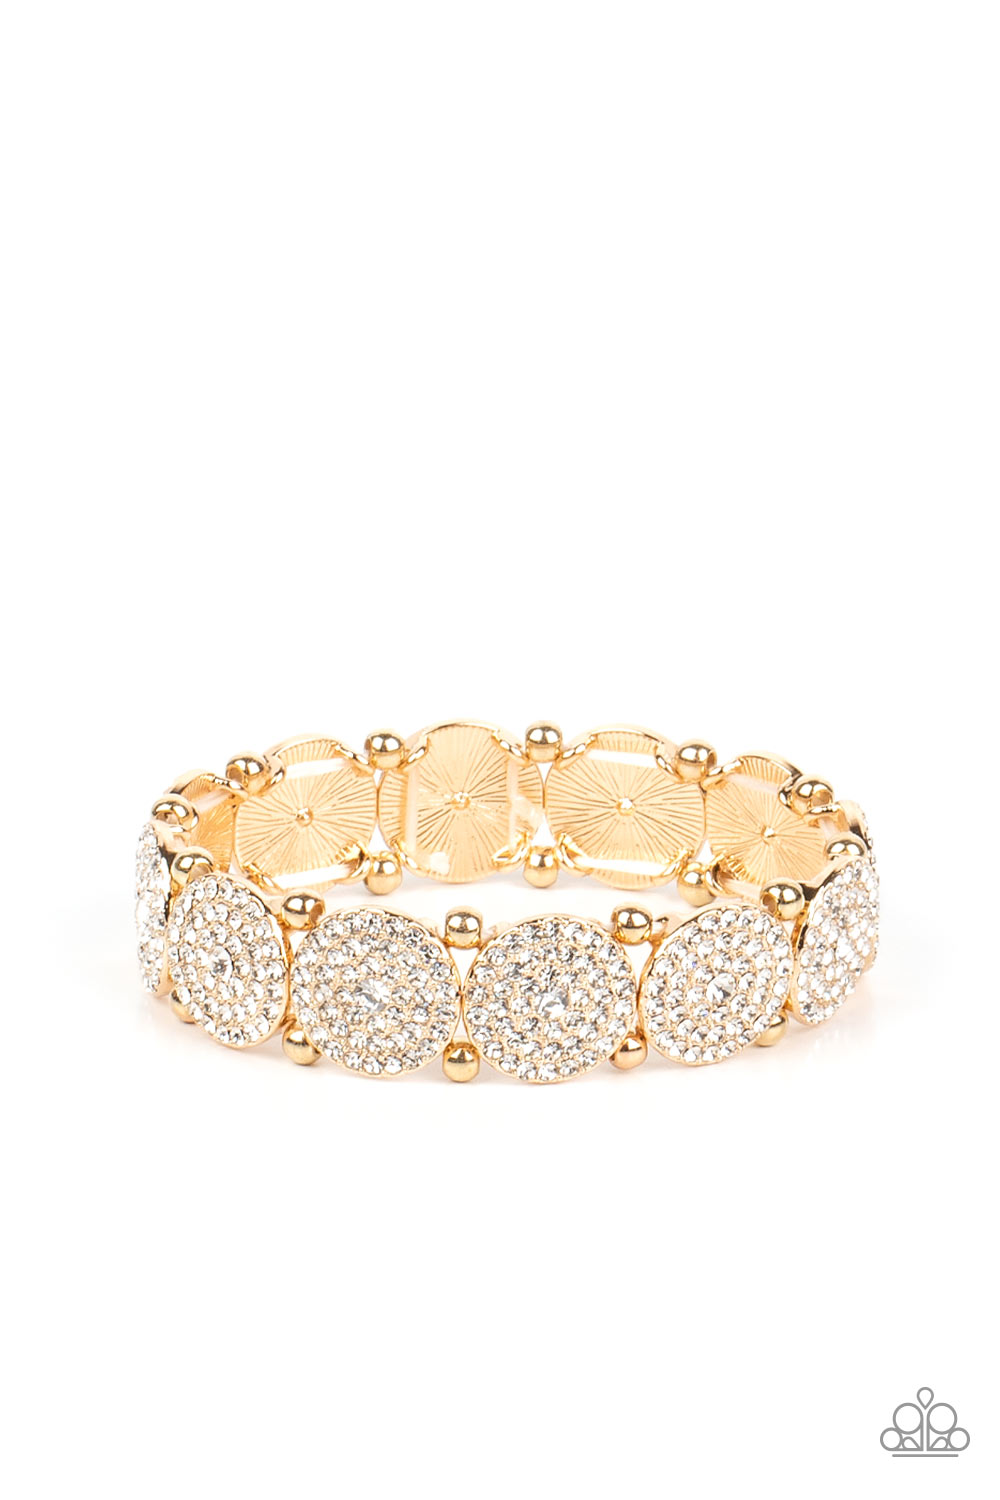 Palace Intrigue - Gold Beads & White Rhinestone Encrusted Frame Paparazzi Stretch Bracelet